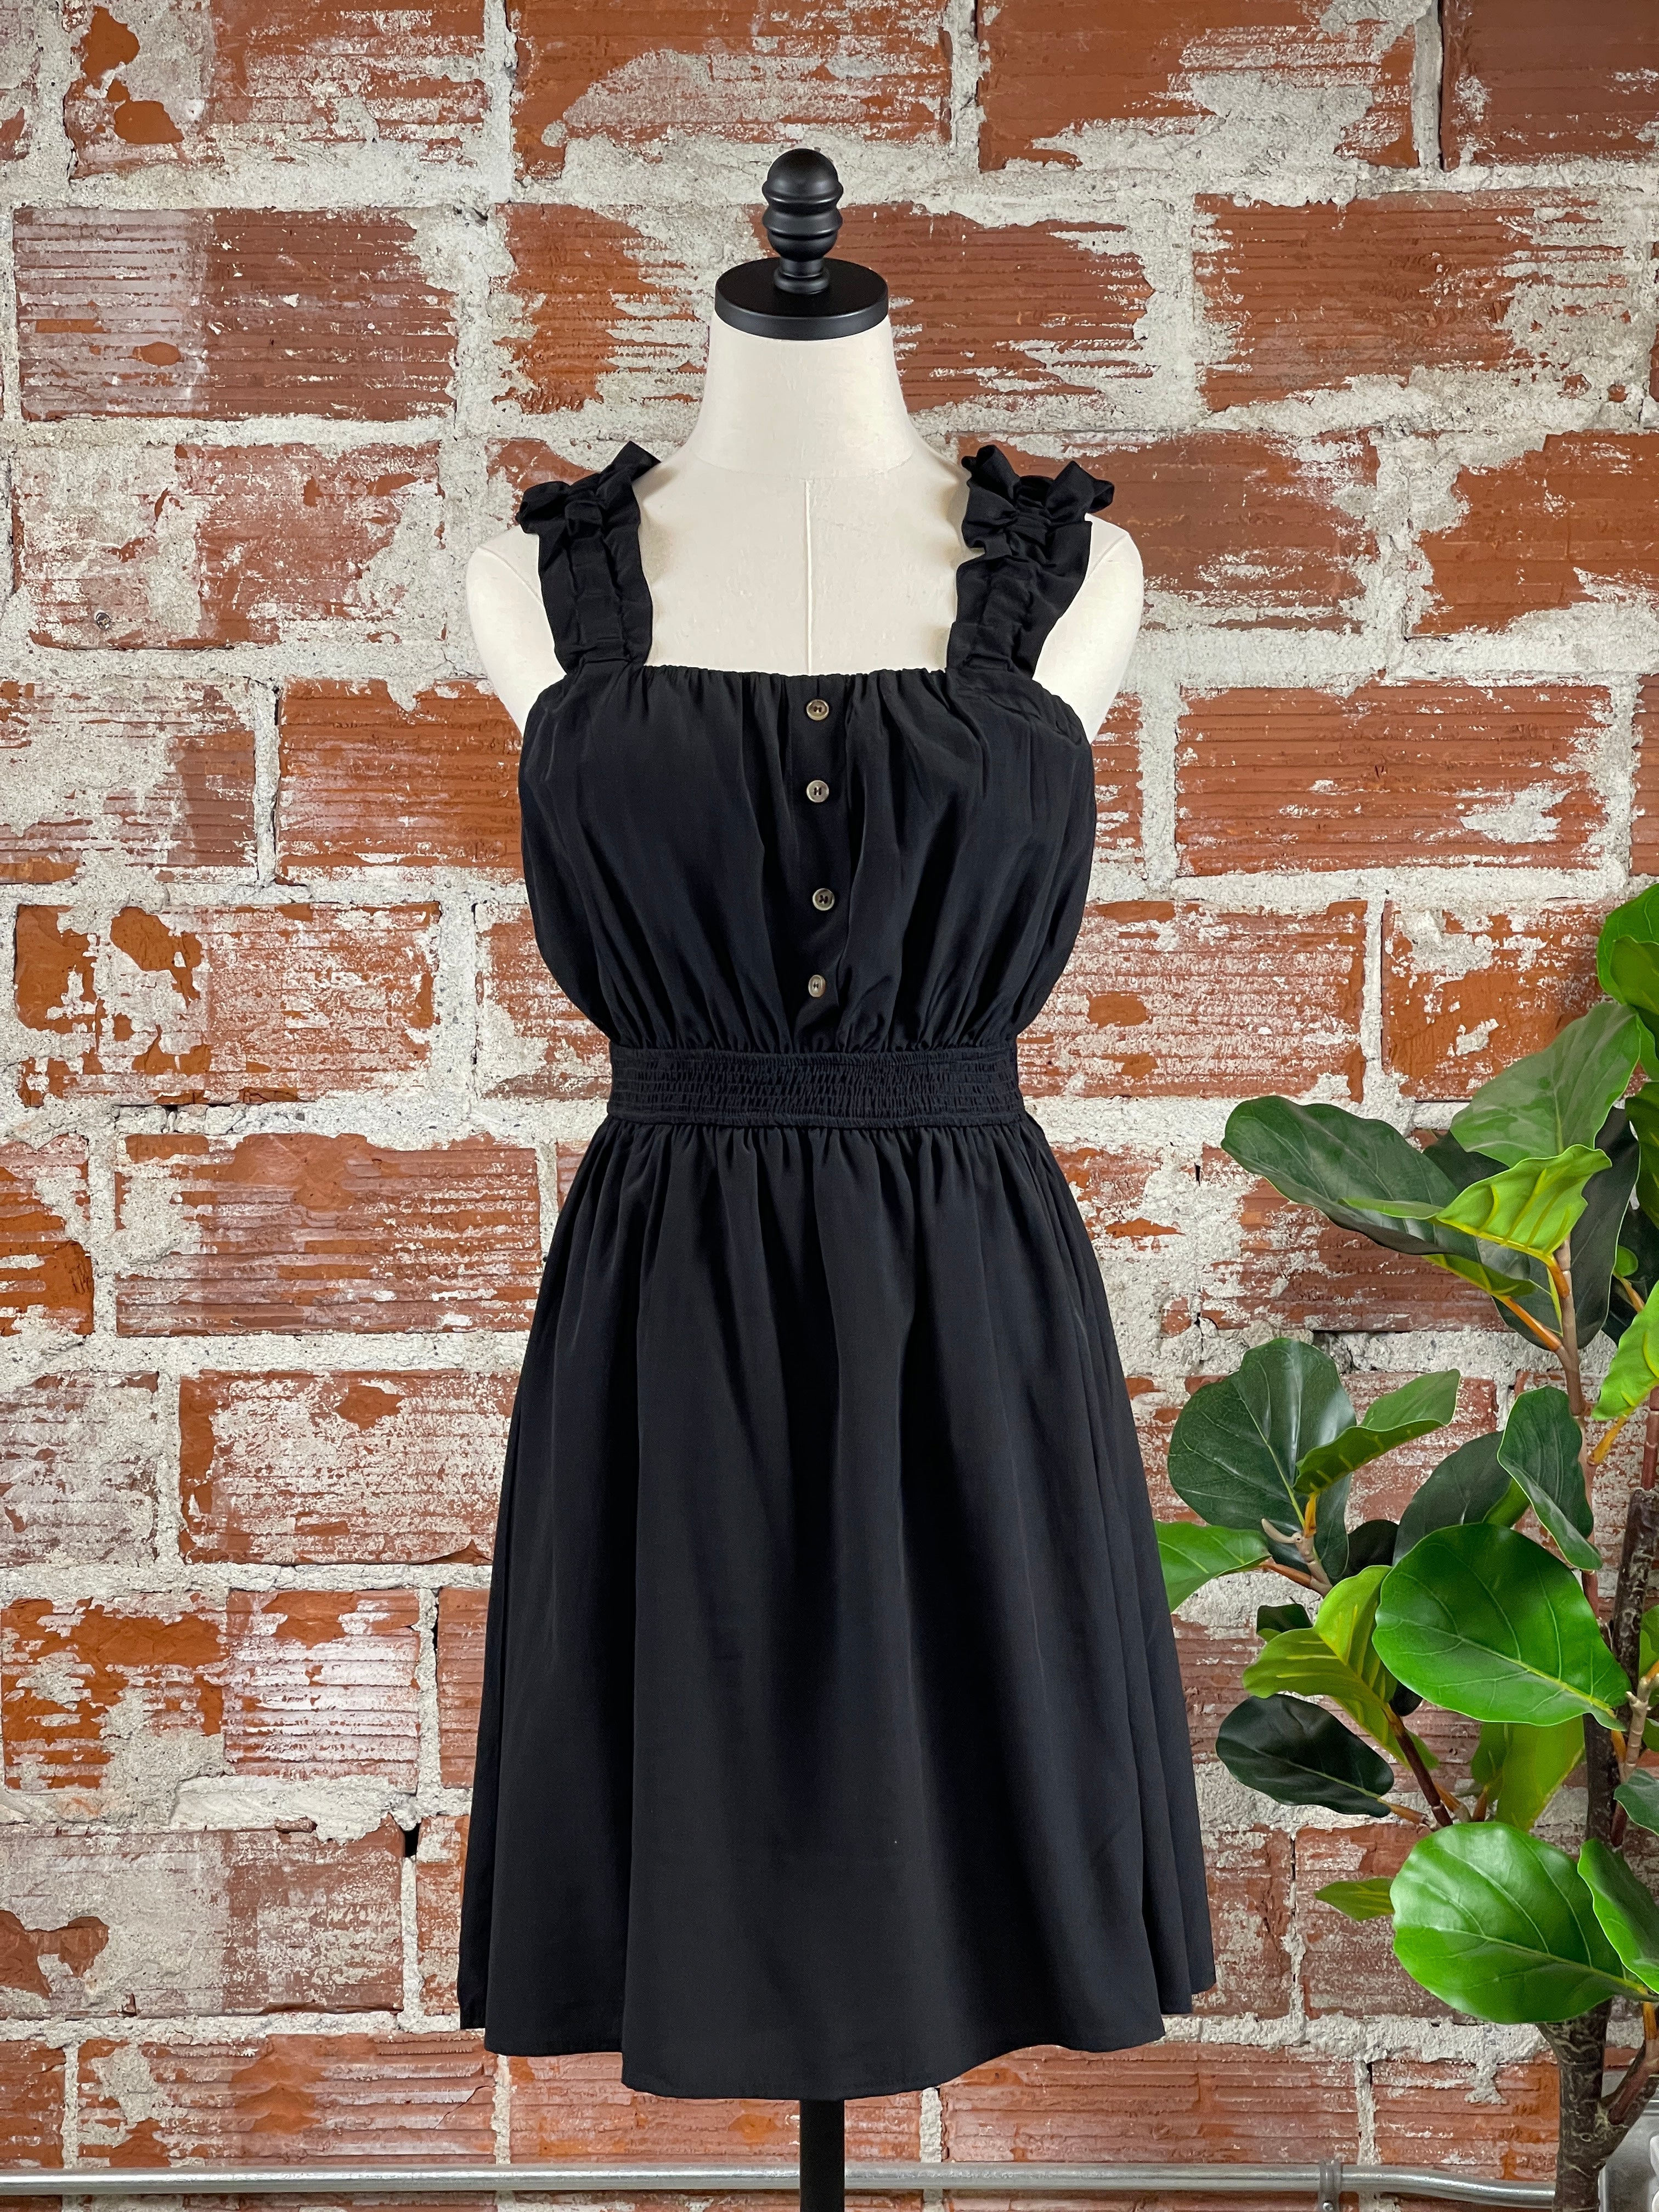 Good Times Dress in Black-151 Dresses - Short-Little Bird Boutique